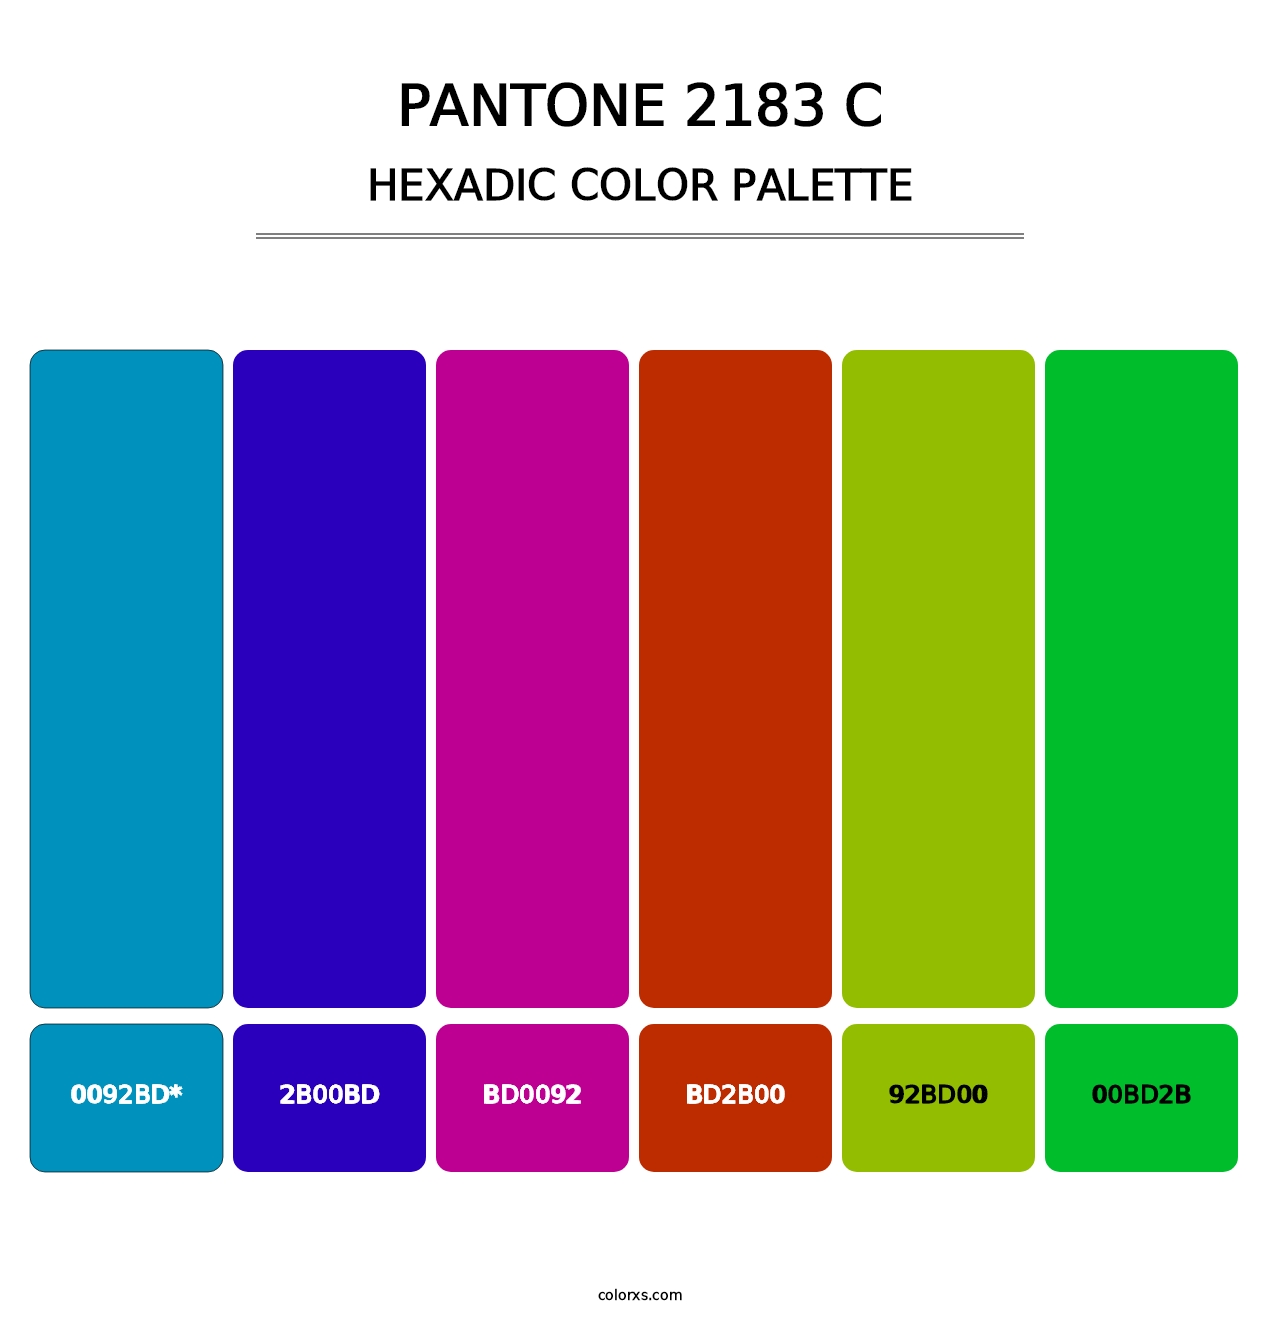 PANTONE 2183 C - Hexadic Color Palette